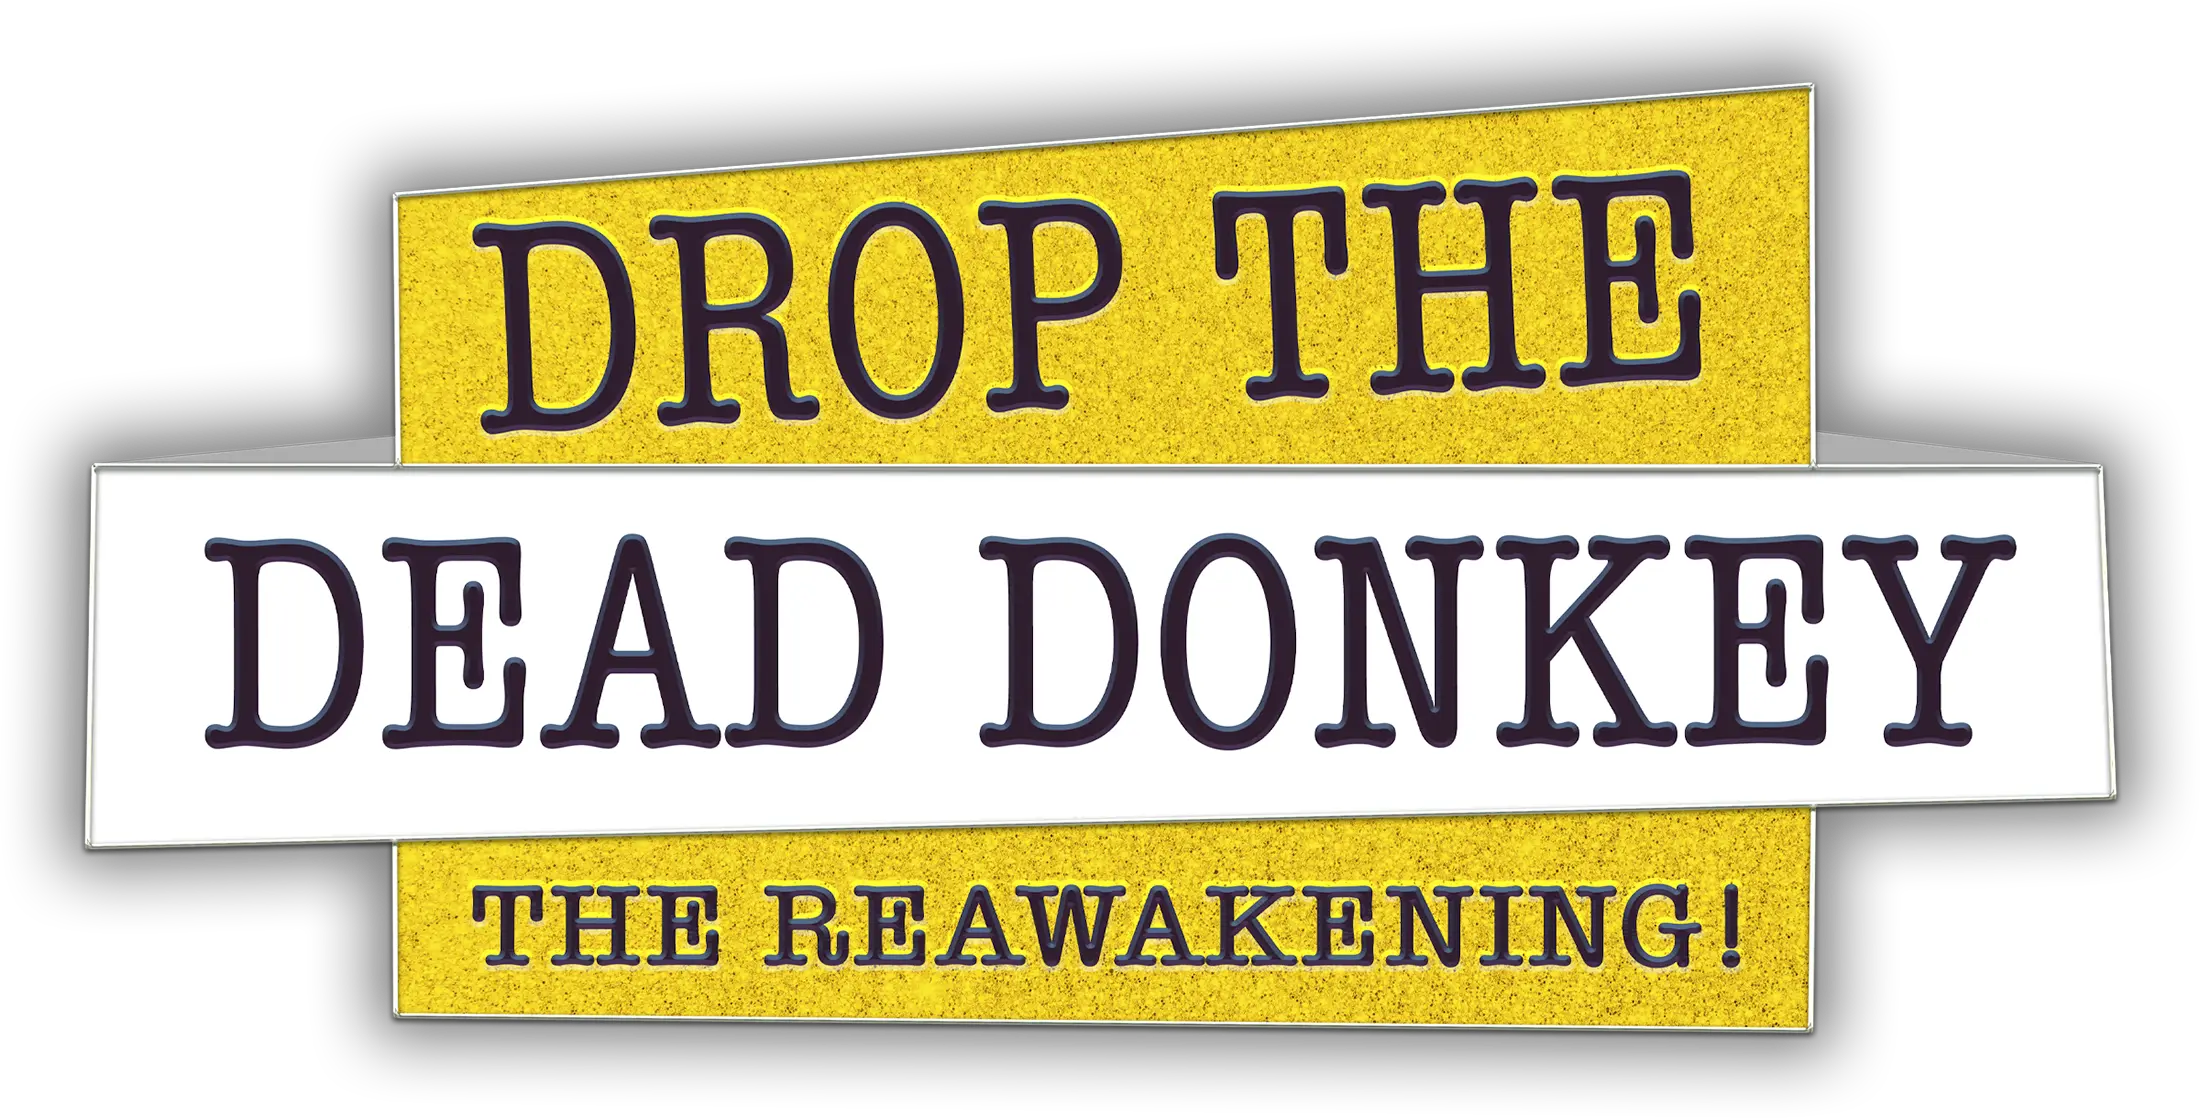 Drop the Dead Donkey: The Reawakening title treatment